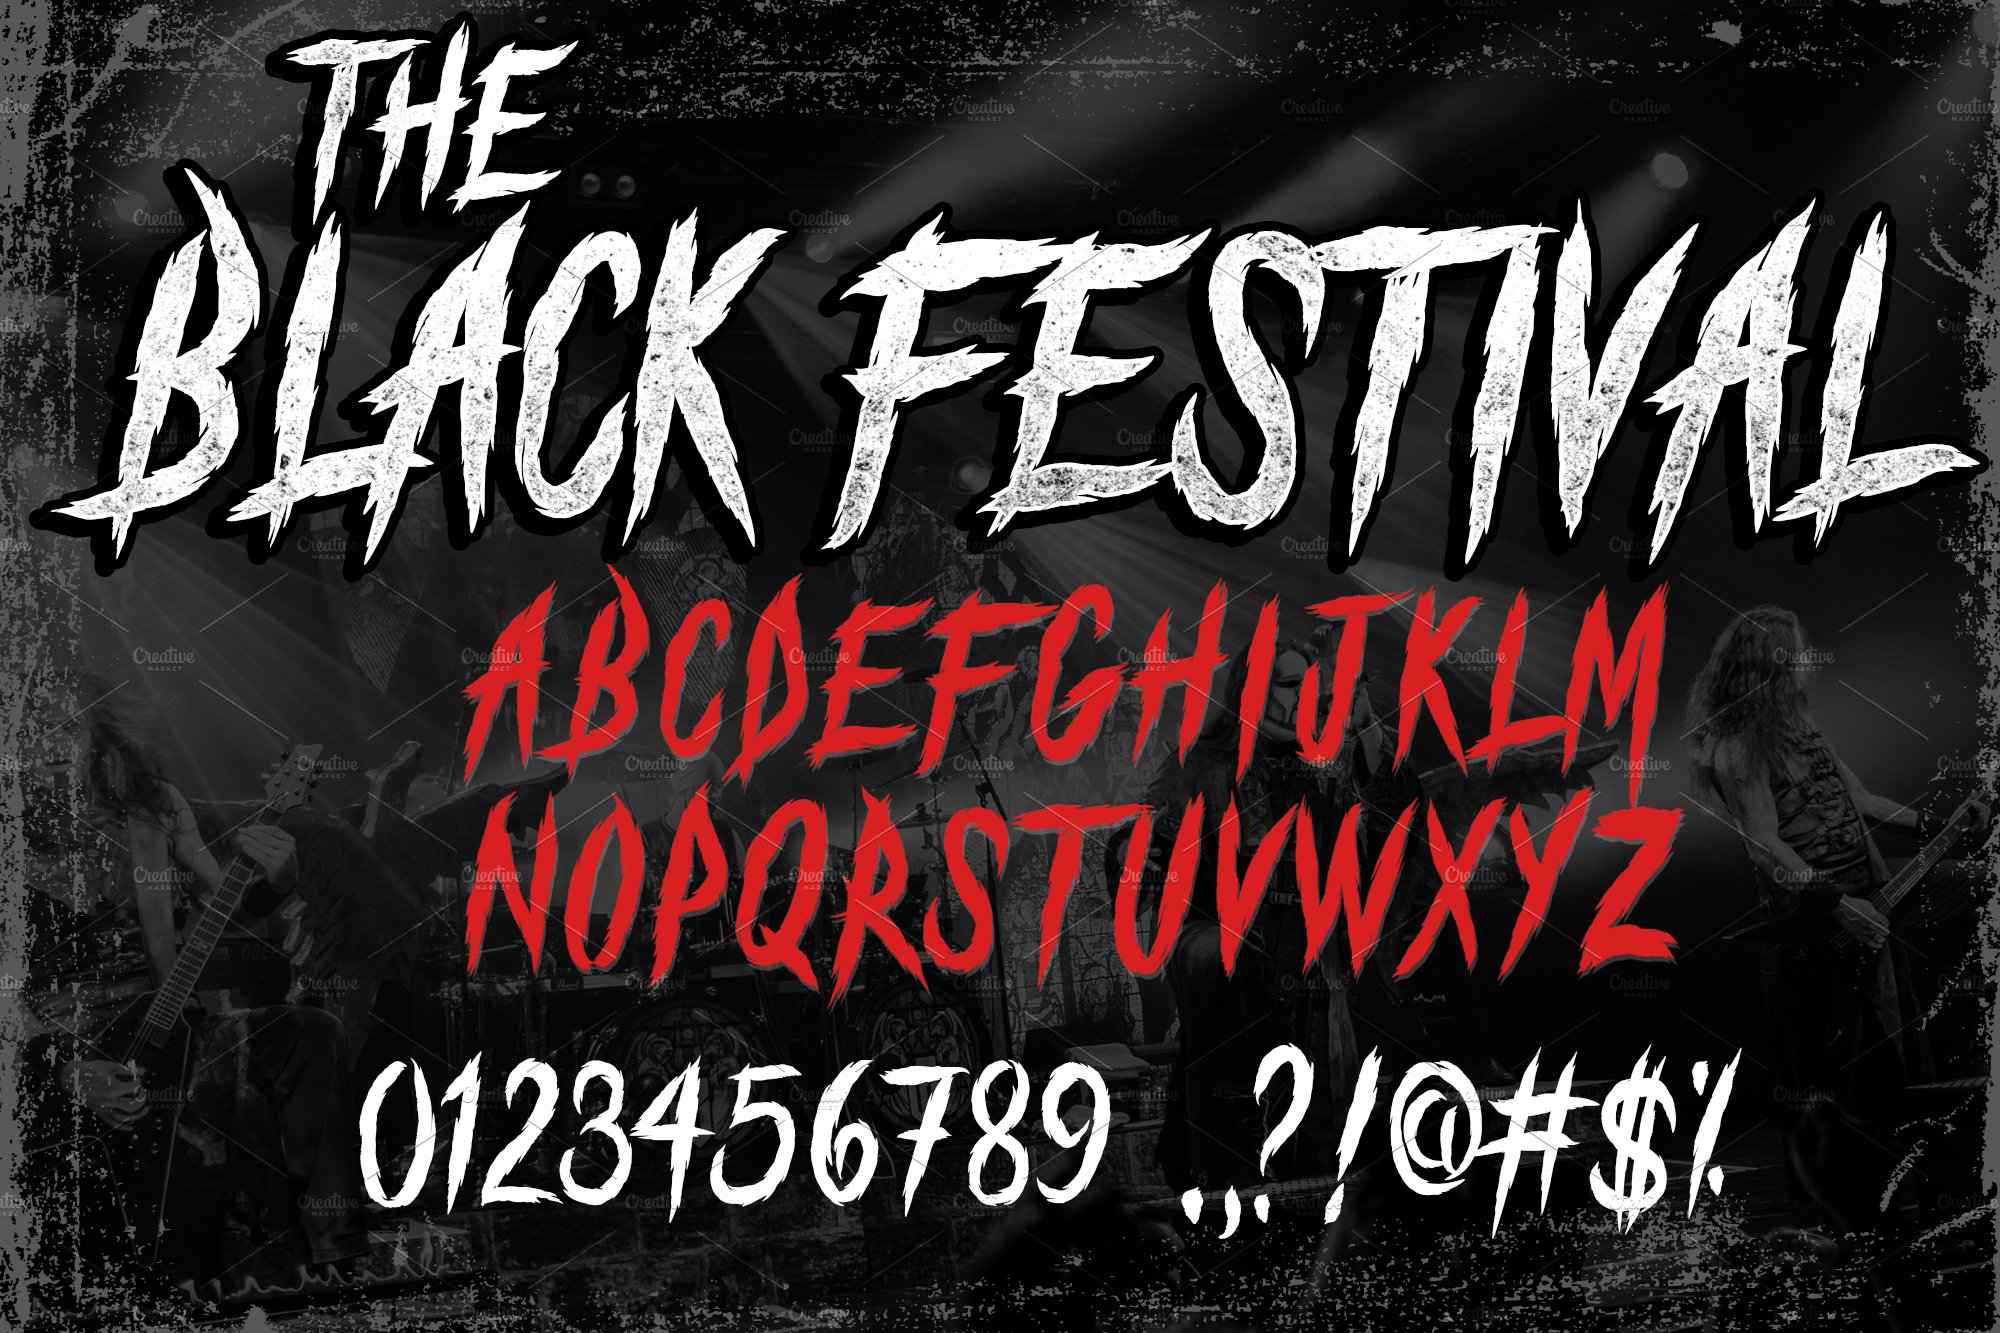 The Black Festival cover image.